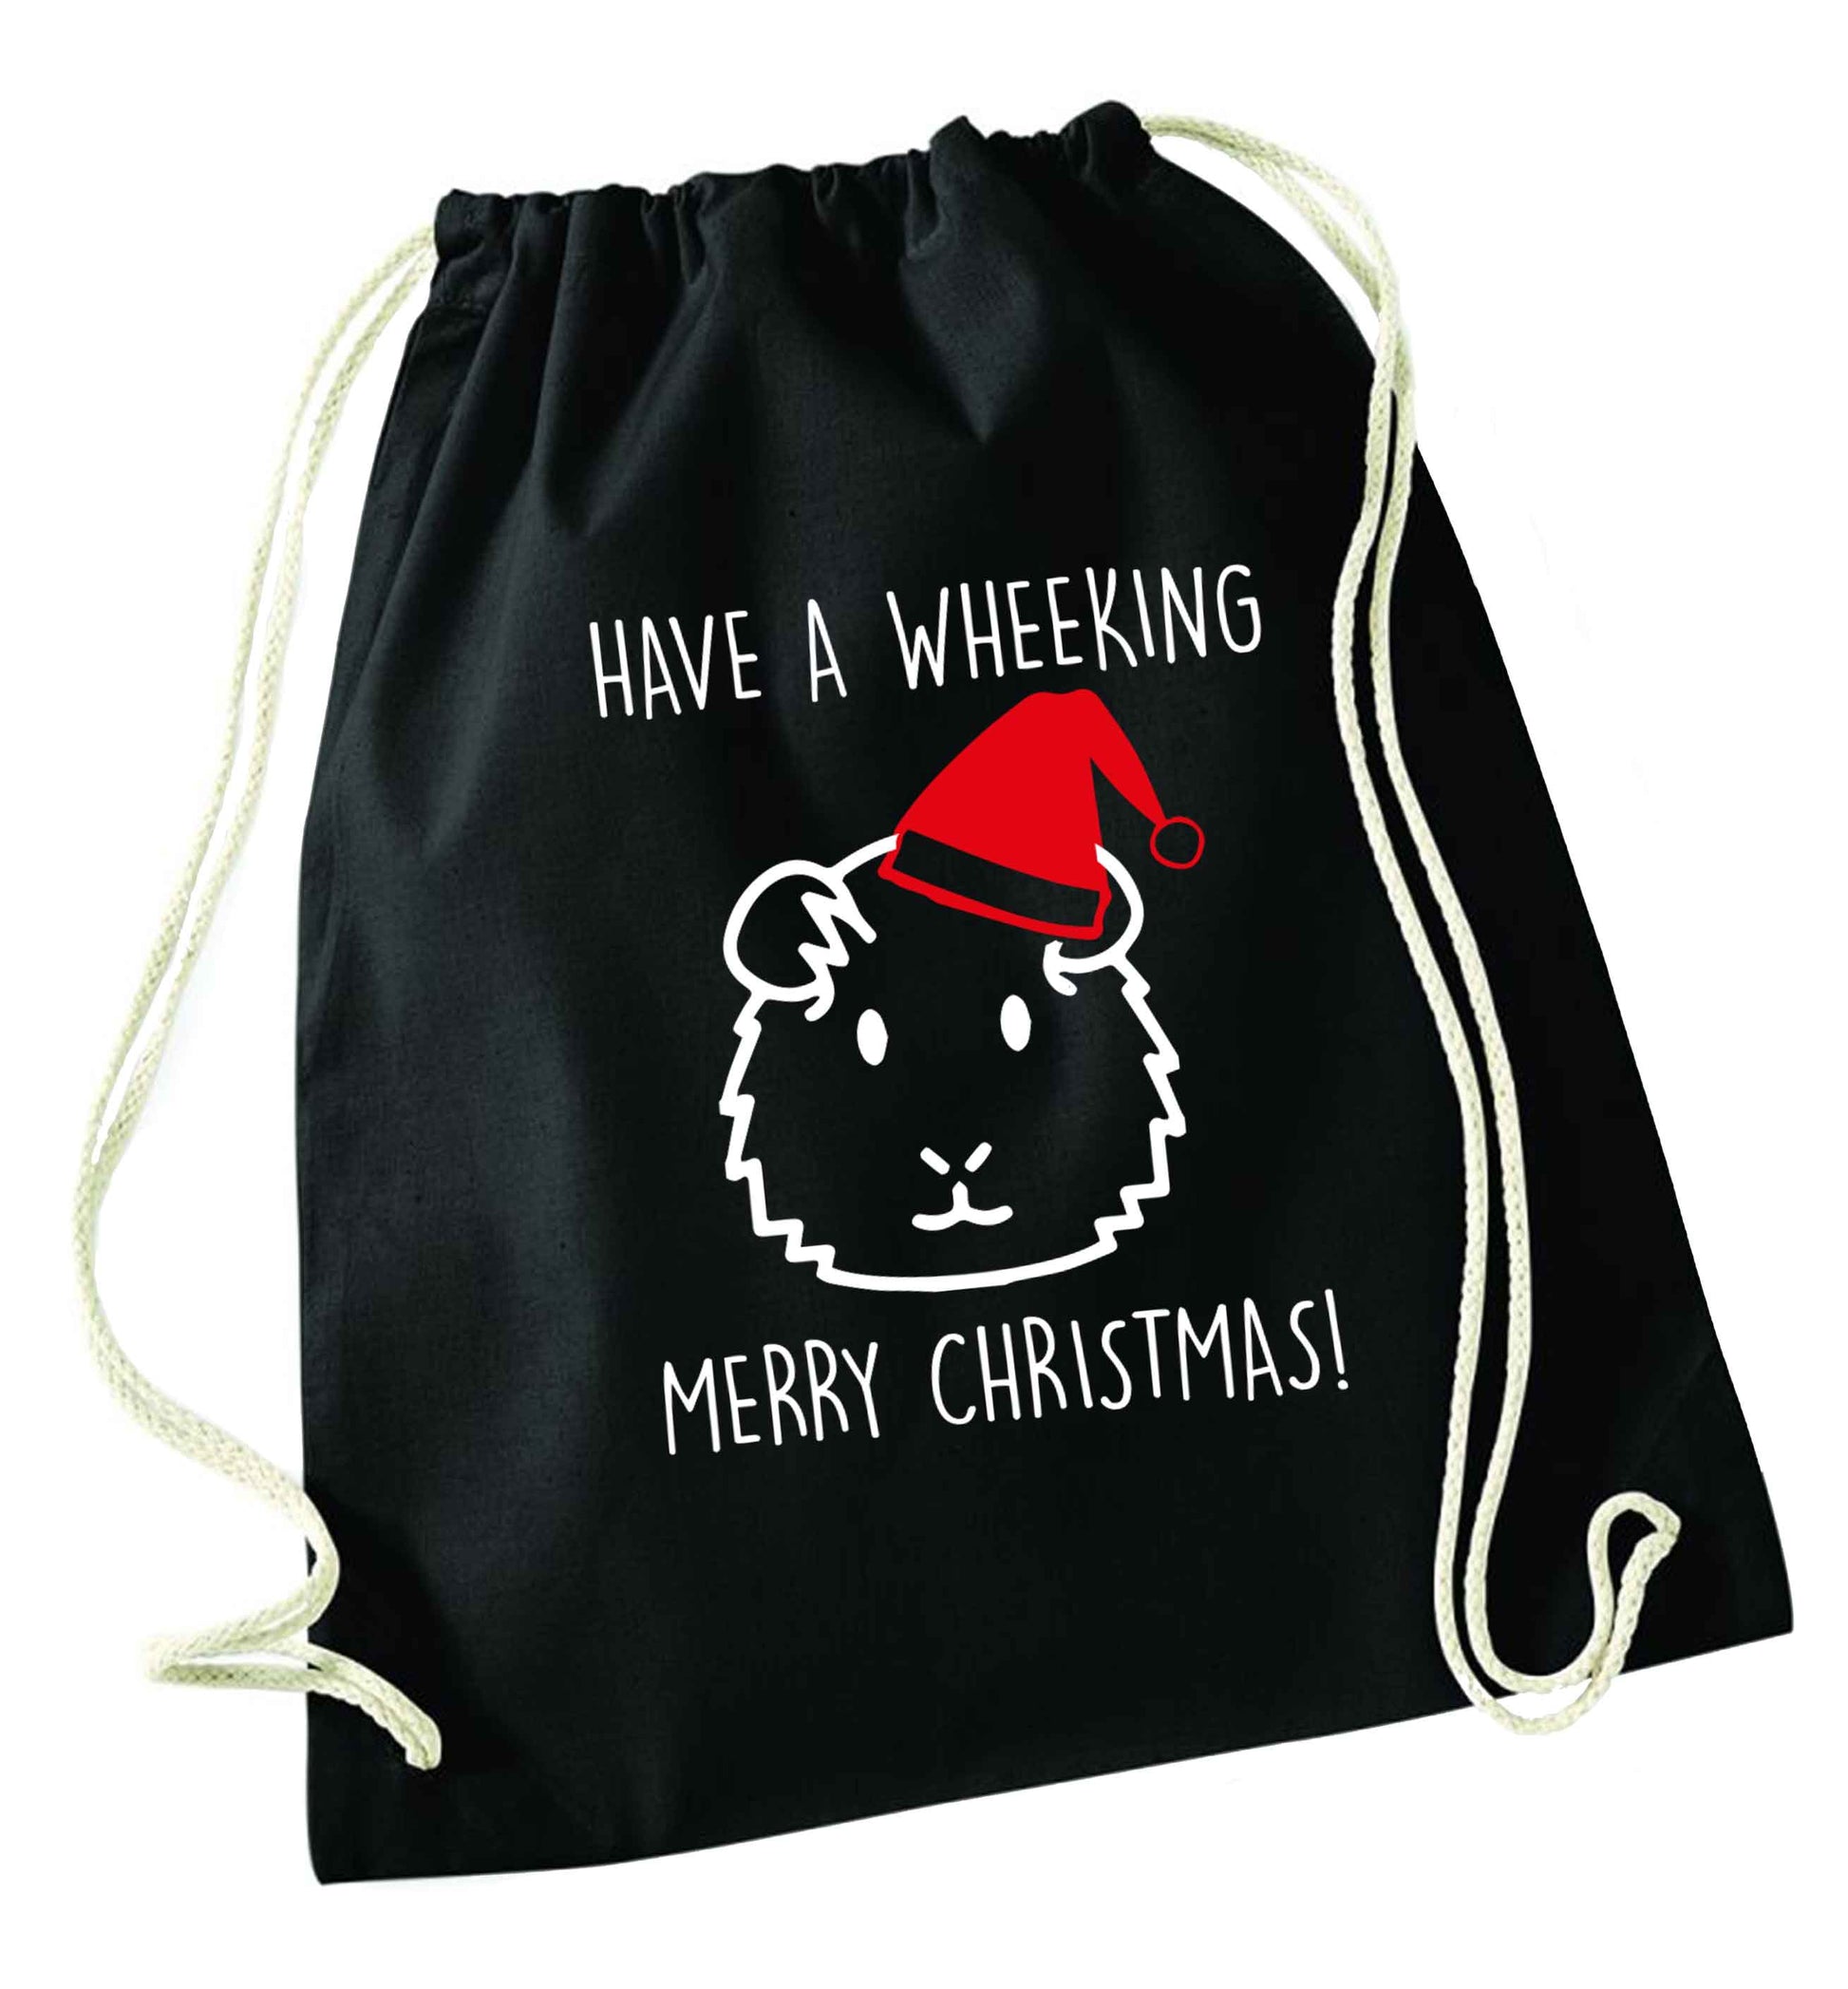 Have a wheeking merry Christmas black drawstring bag